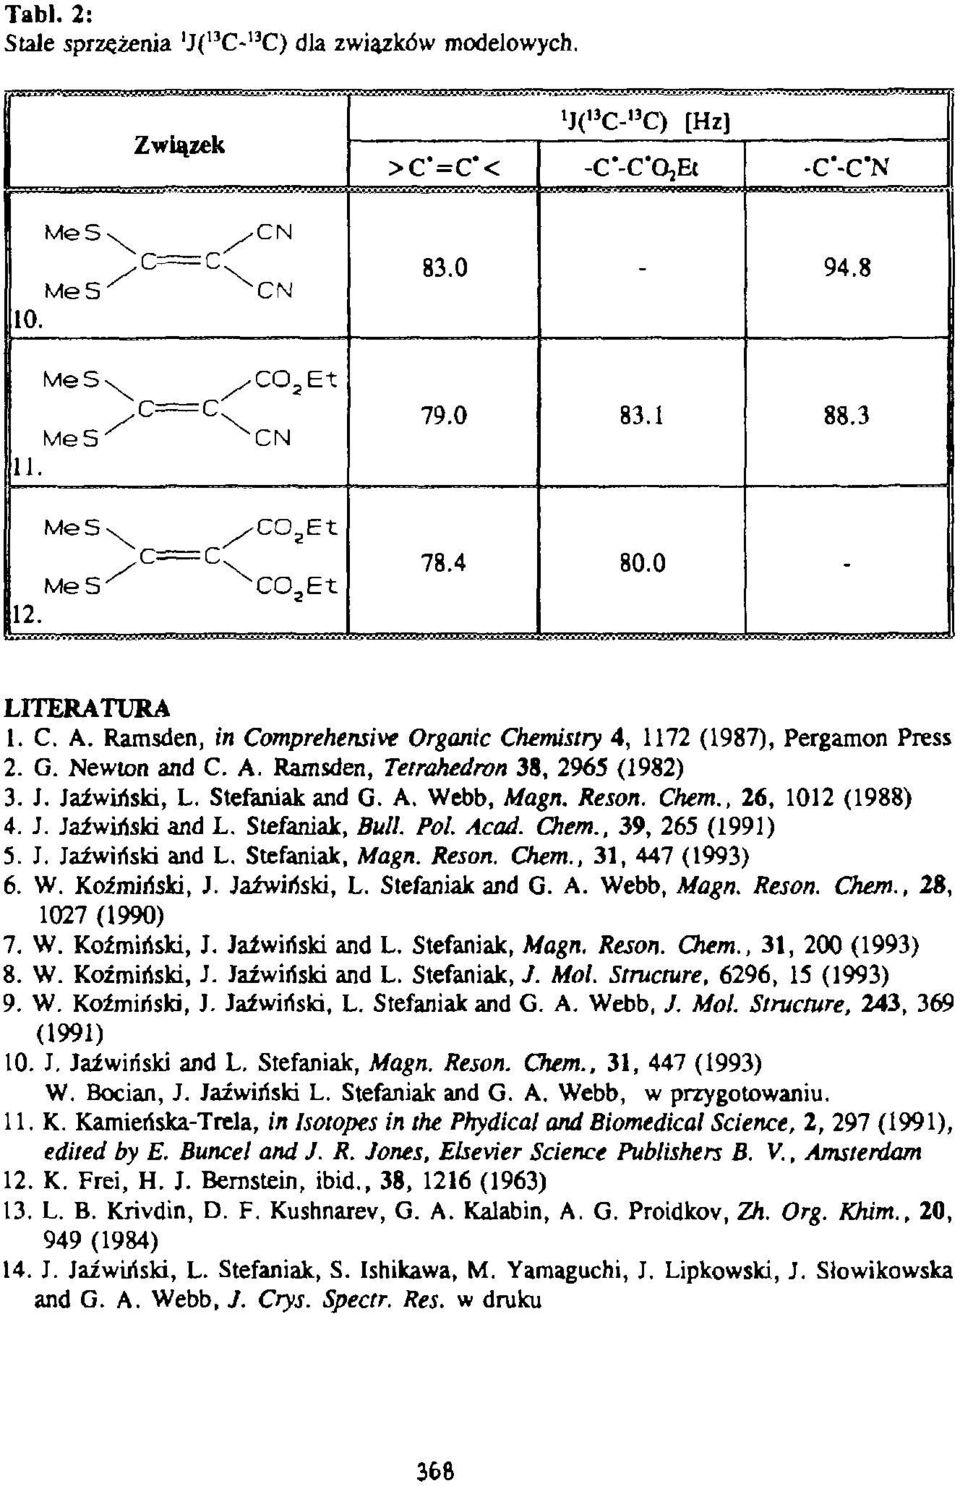 Jazwiriski, L. Stefaniak and G. A. Webb, Magn. Reson. Chem., 26, 1012 (1988) 4. J. Jaiwuiski and L. Stefaniak, Bull. Pol. Acad. Chem., 39, 265 (1991) 5. J. Jazwiiiski and L. Stefaniak, Magn. Reson. Chem., 31, 447 (1993) 6.